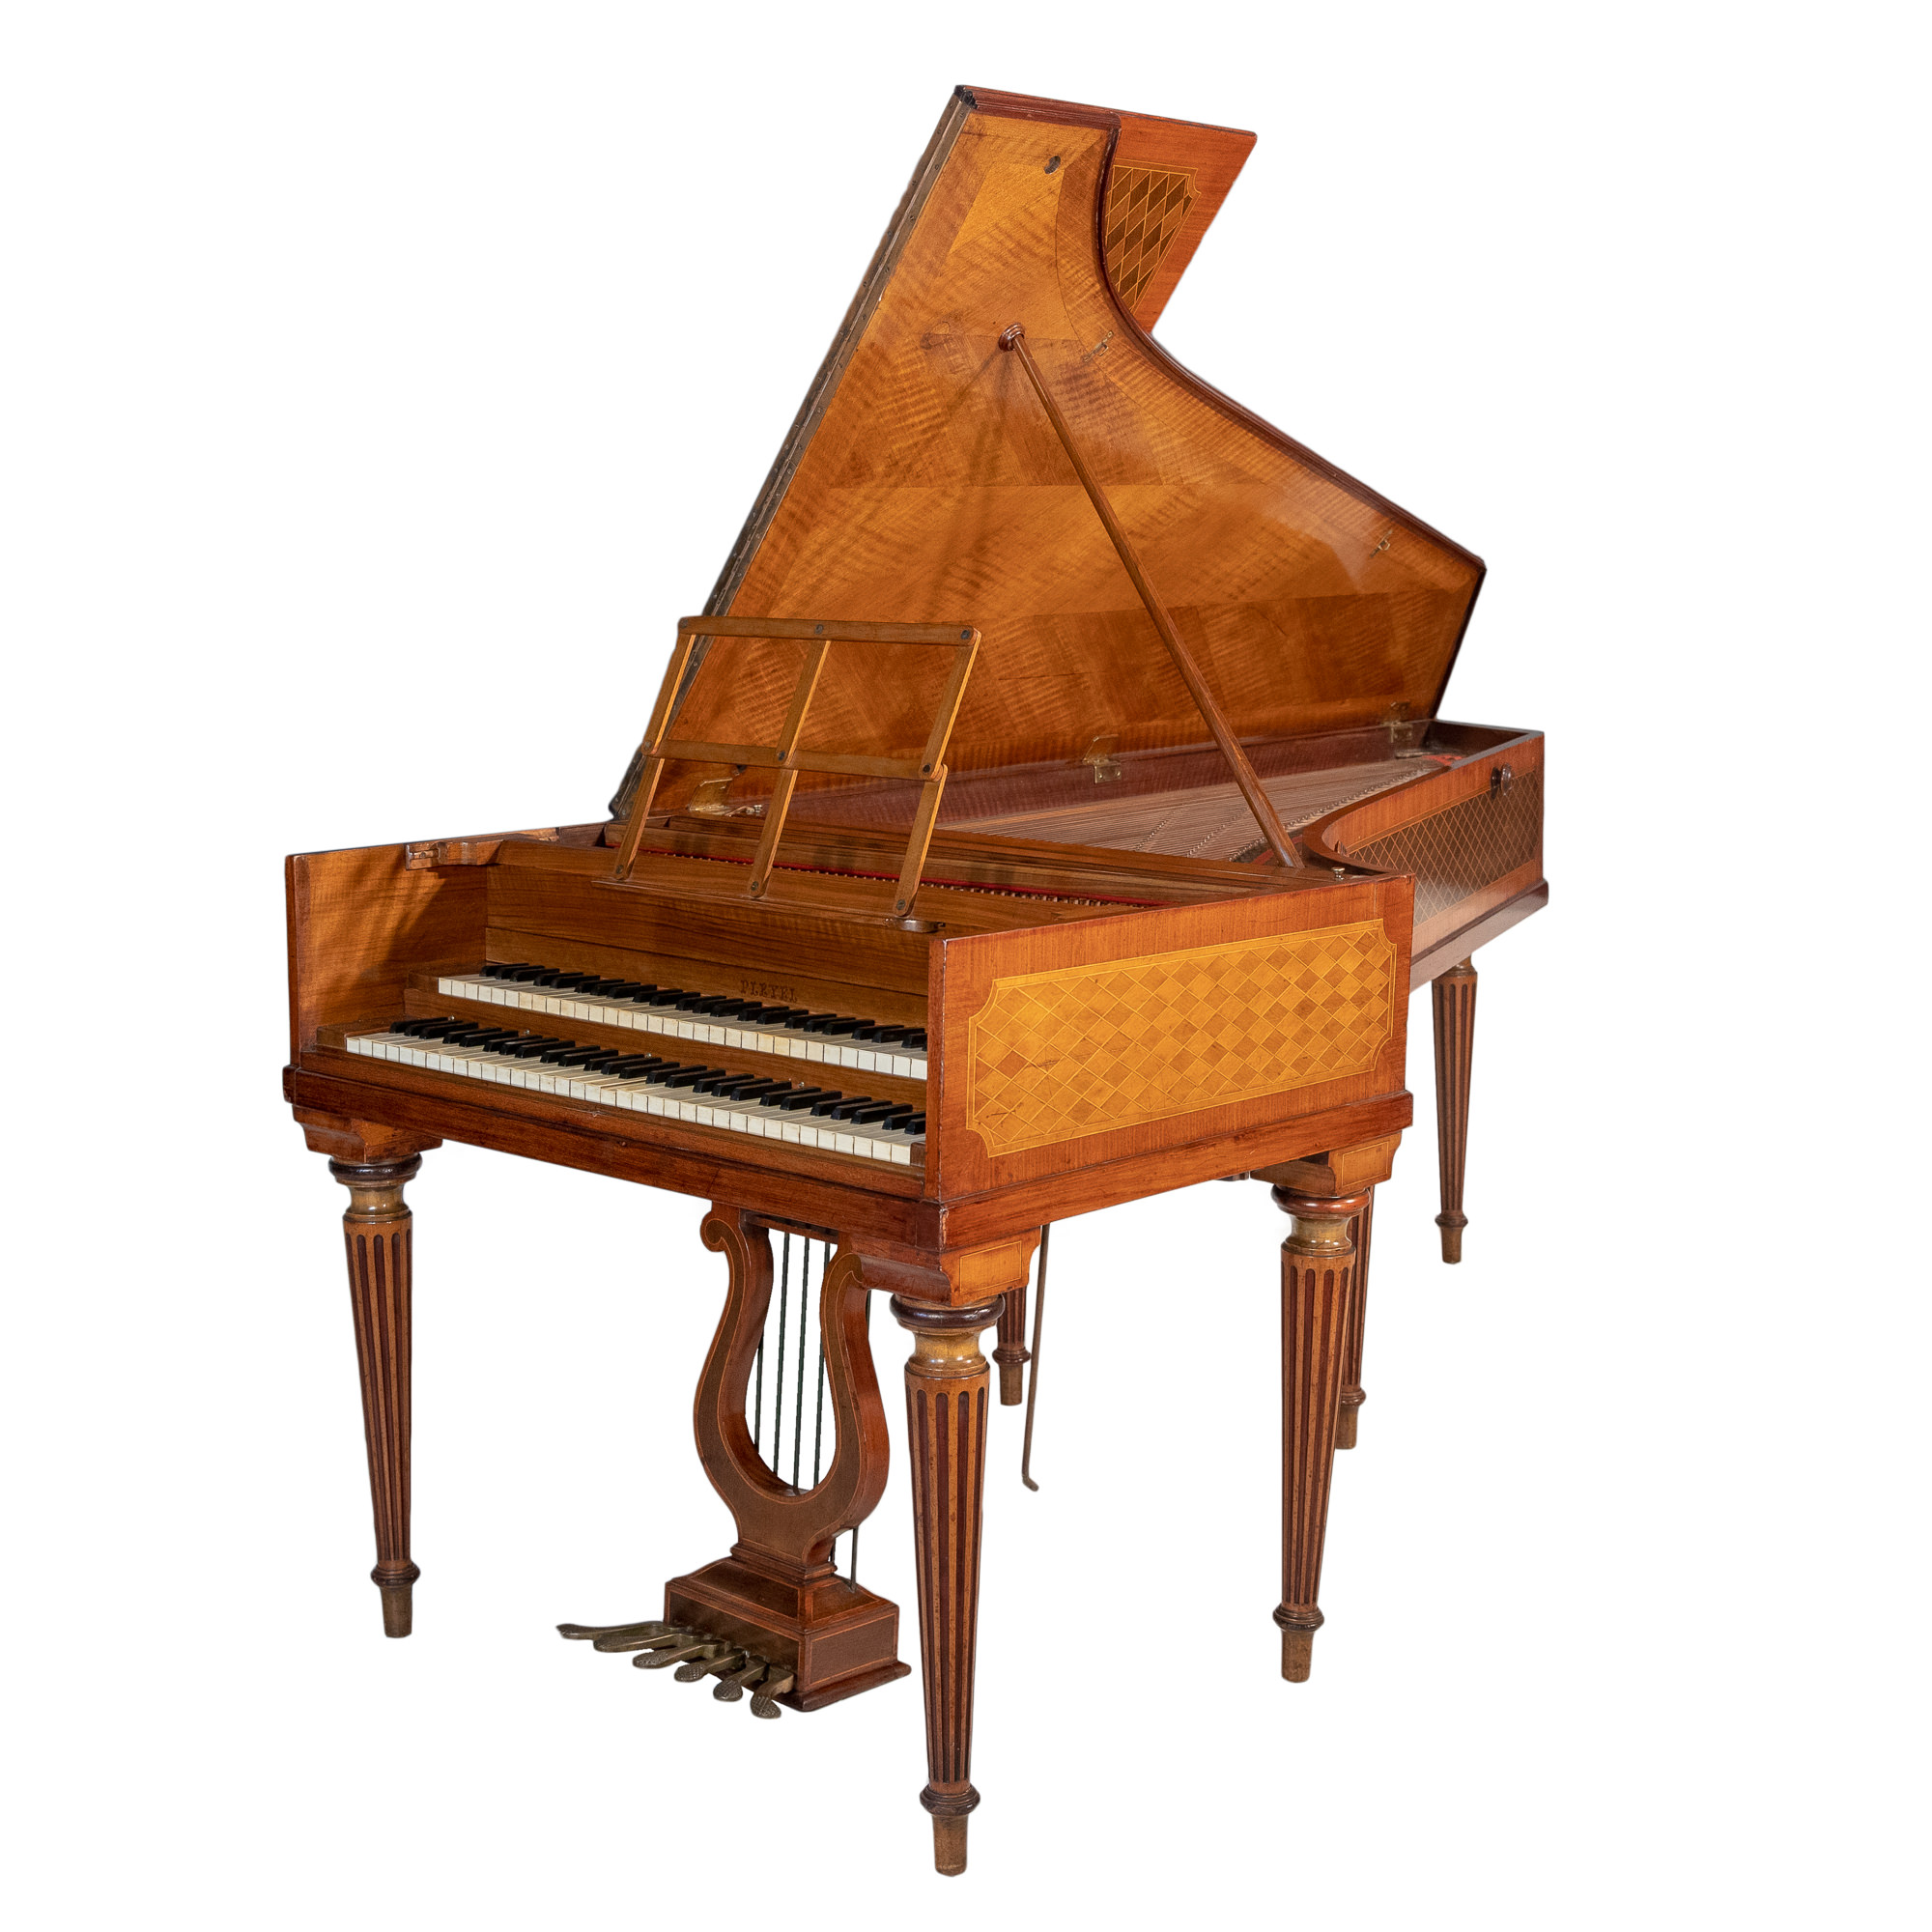 'Important Pleyel Double-Manual Harpsichord 1905 Property of Wanda Landowska 1905-7'